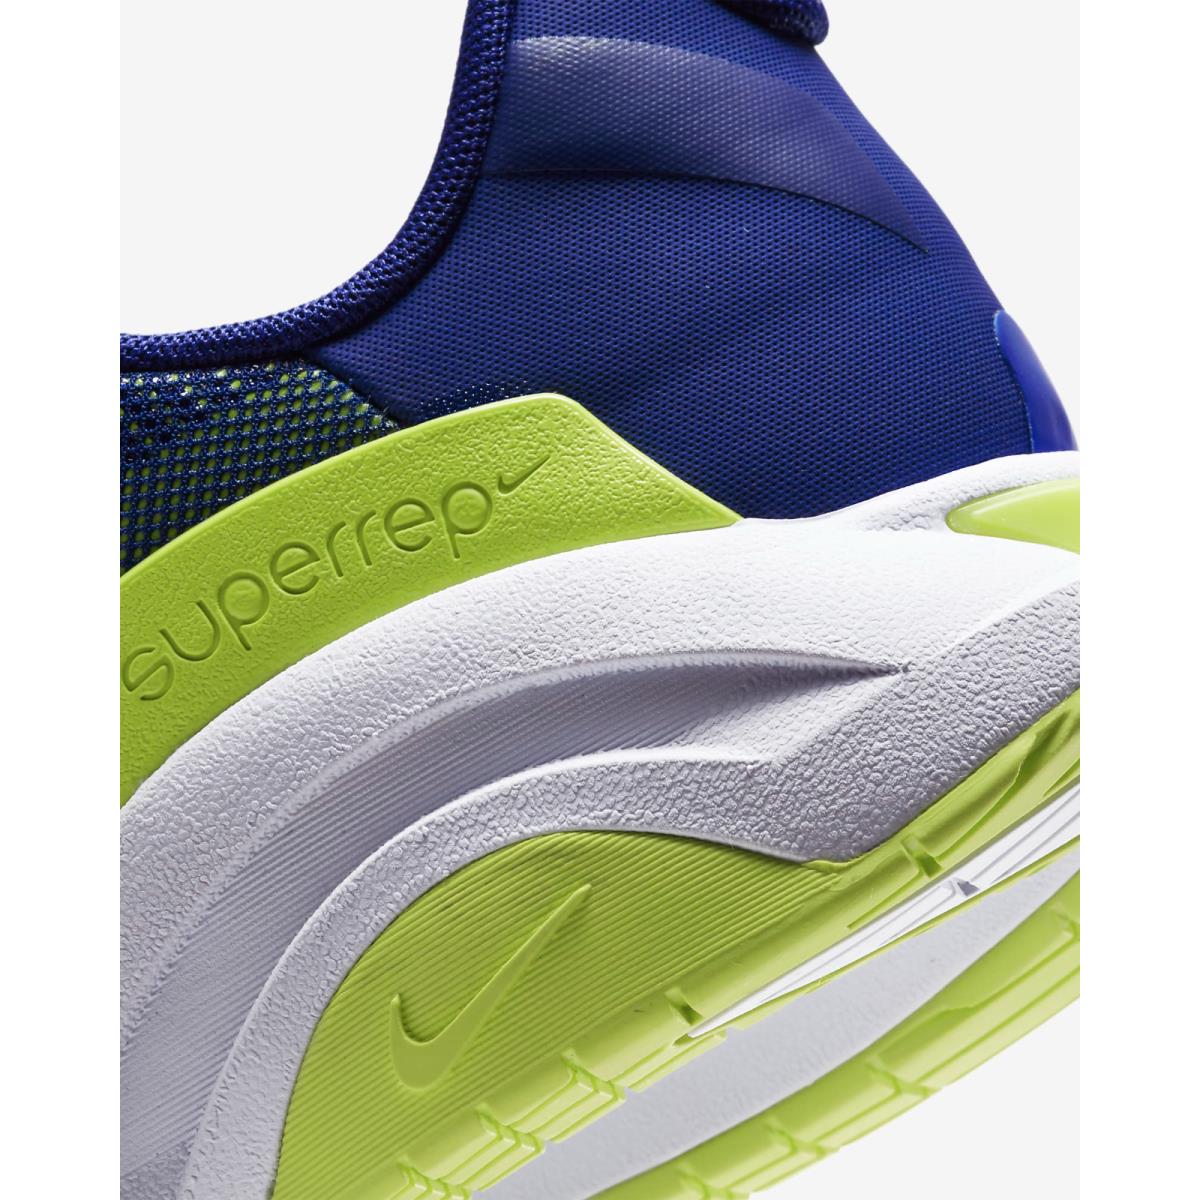 Nike shoes ZoomX SuperRep Surge - Deep Royal Blue/Cyber/Bright Mango/White 8